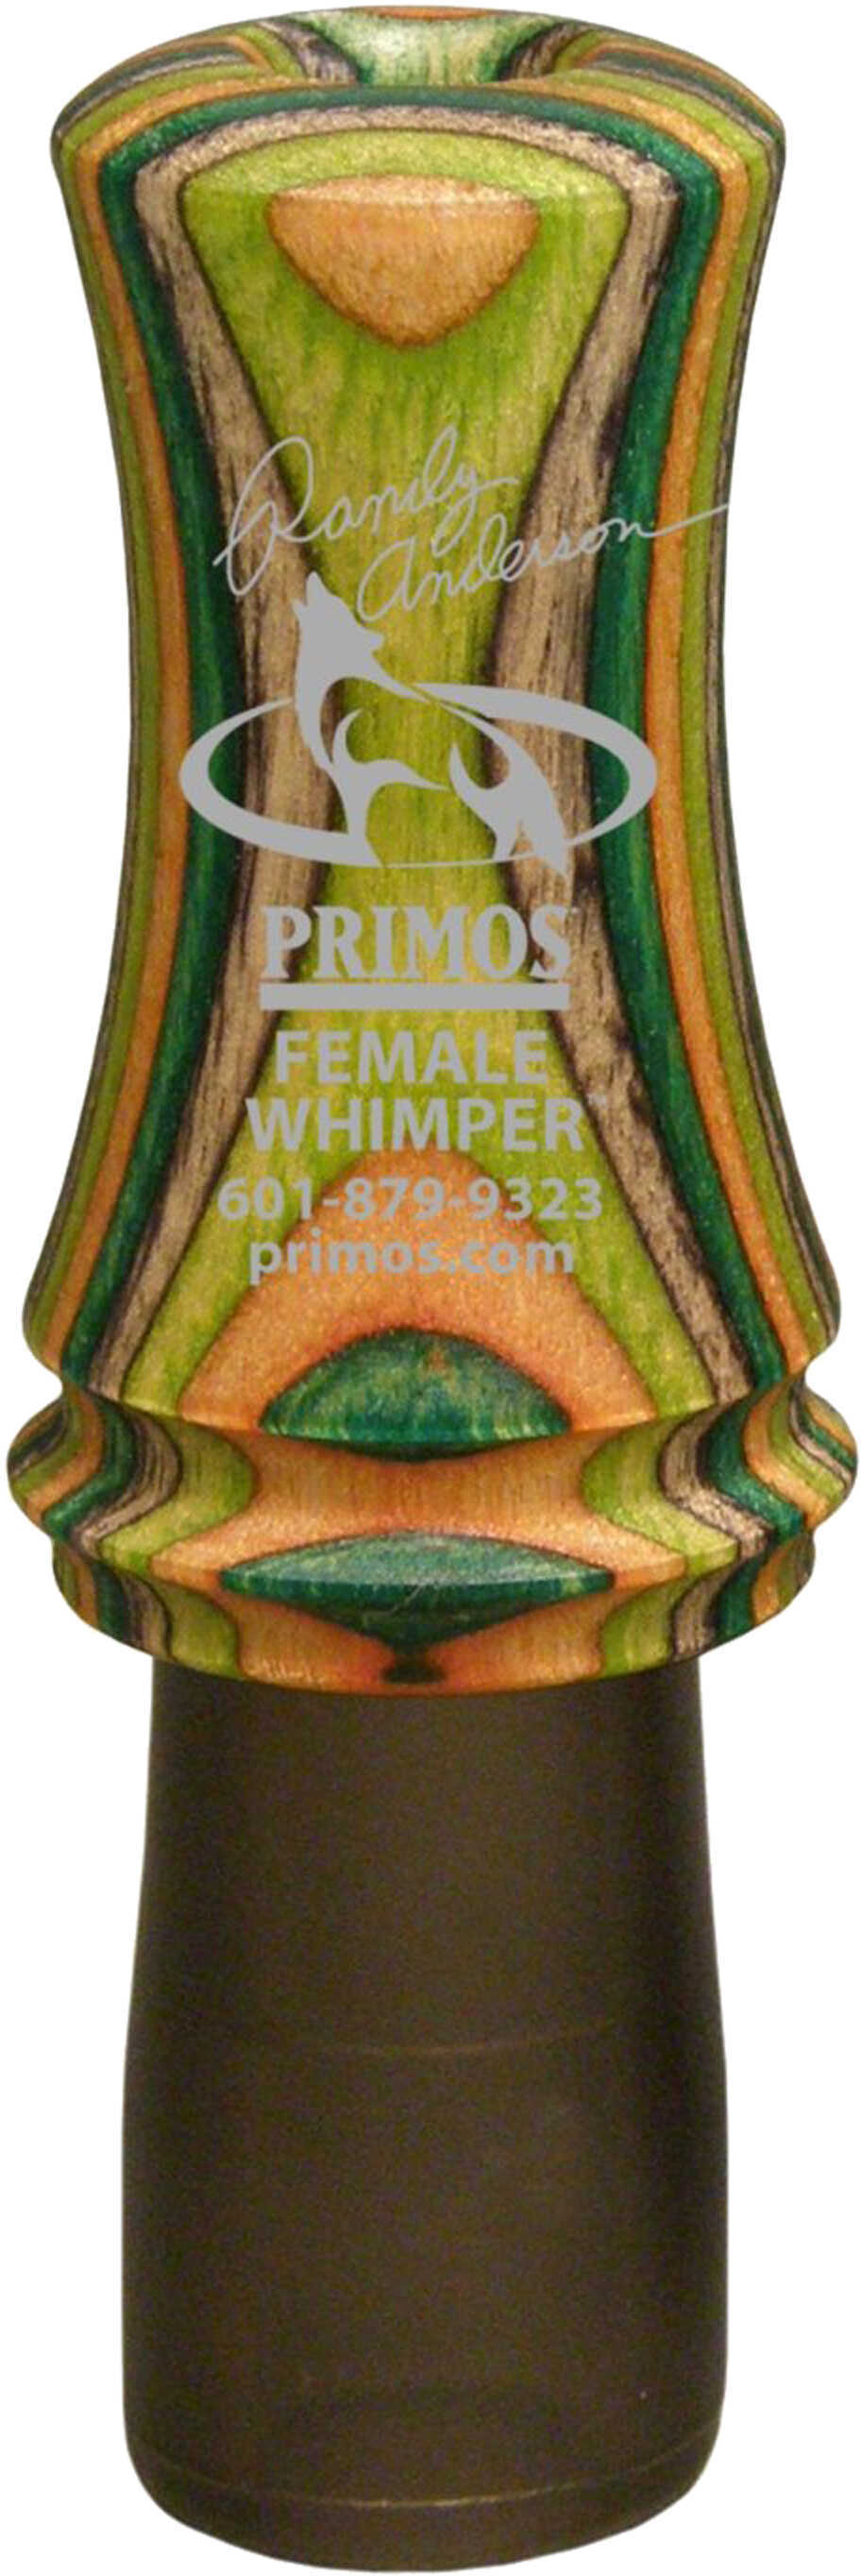 Primos Female Whimper Predator Call Model: PS367